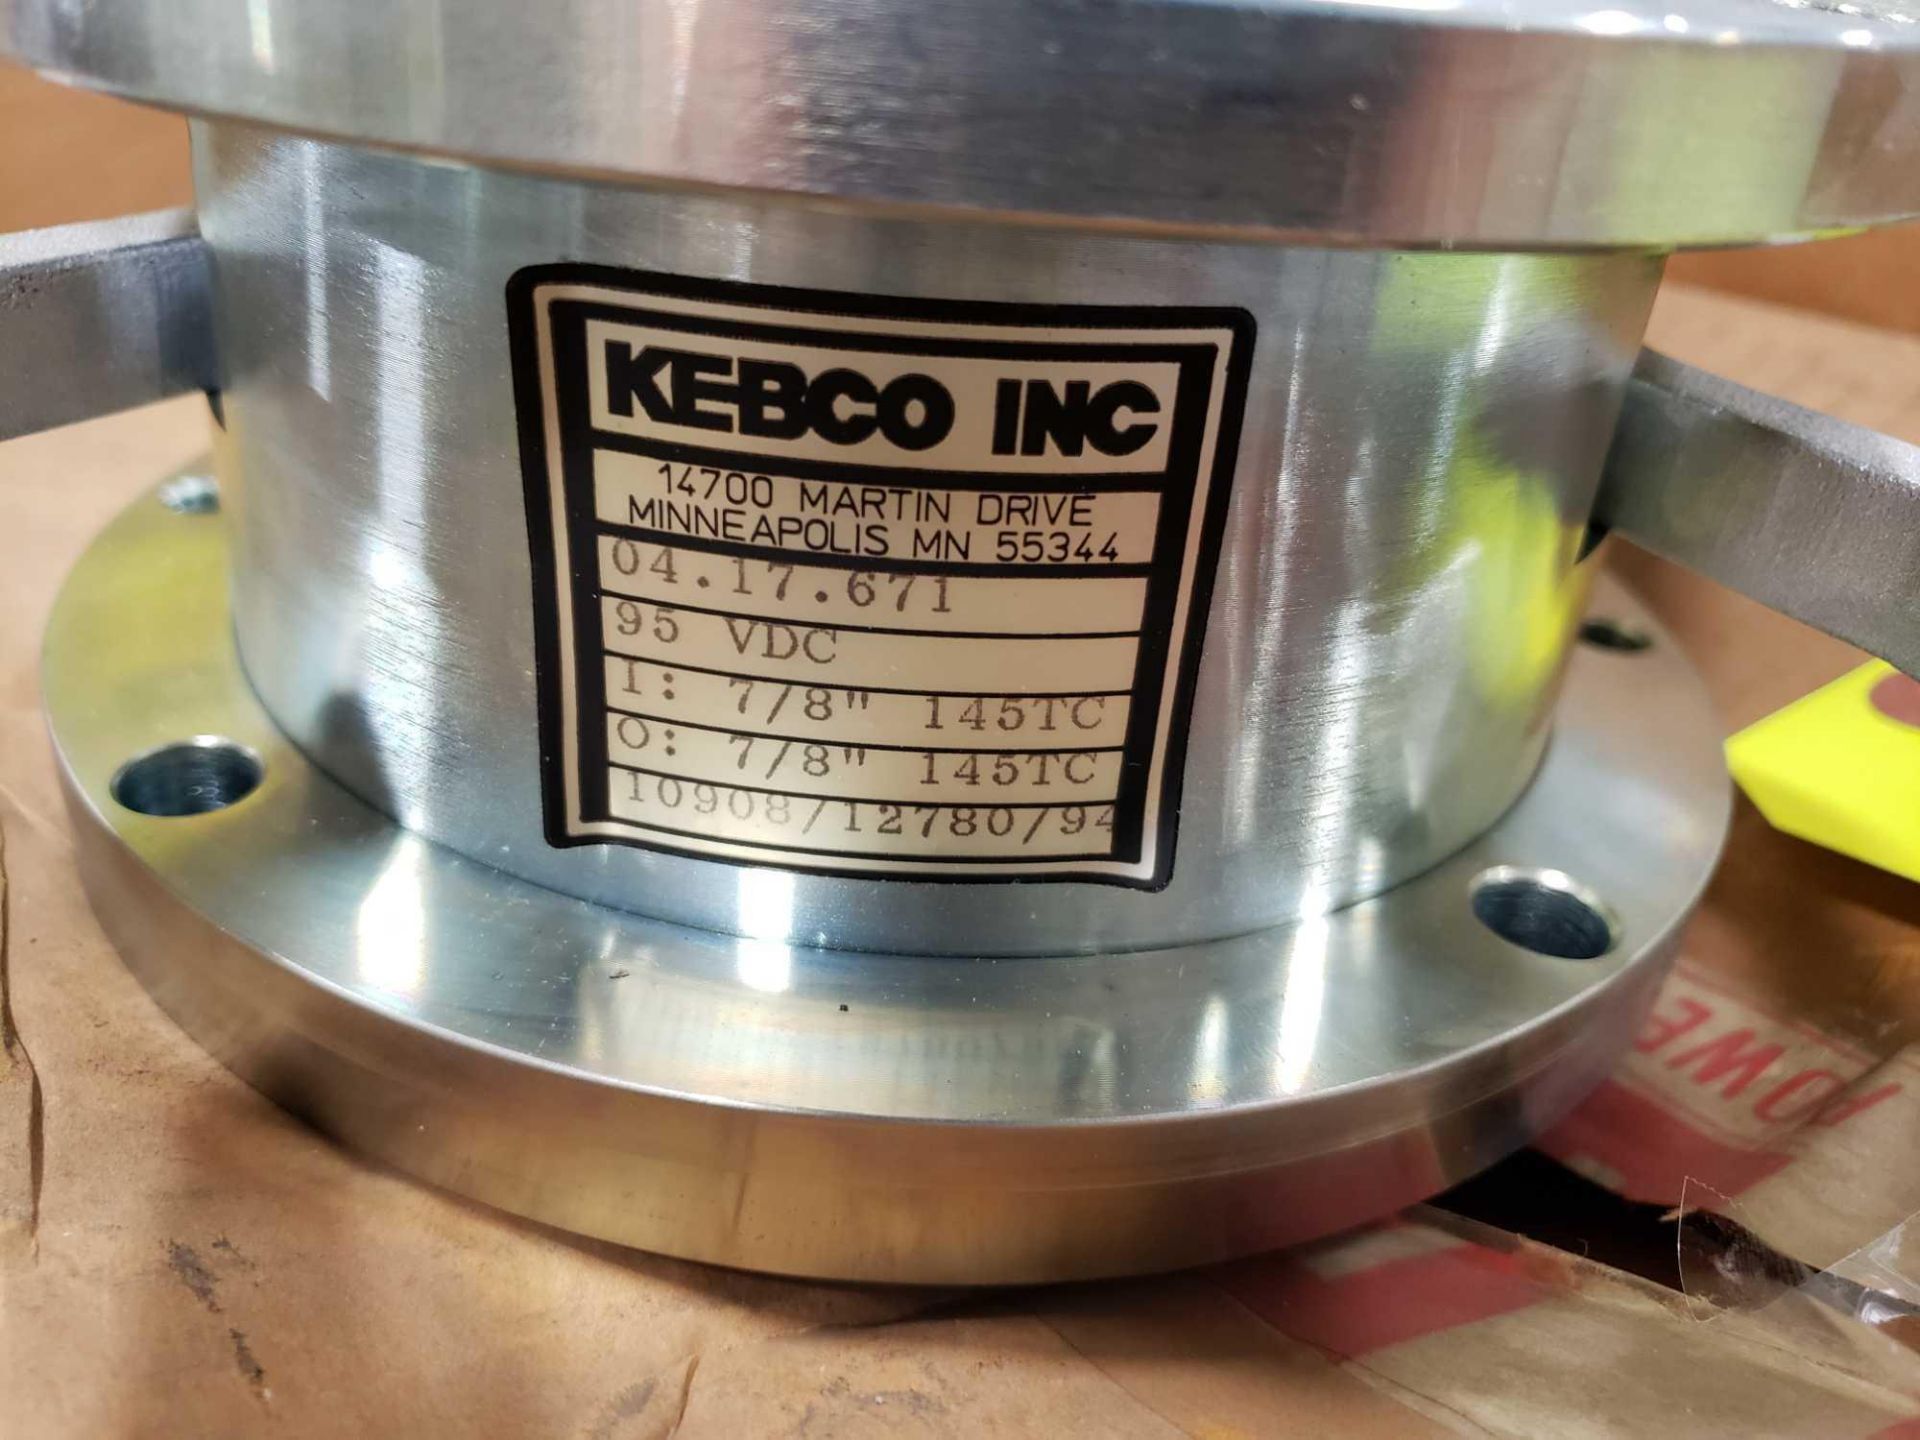 Kebco brake model 04.17.671, 95vdc, 145tc output, 145tc input. New in box. - Image 2 of 3